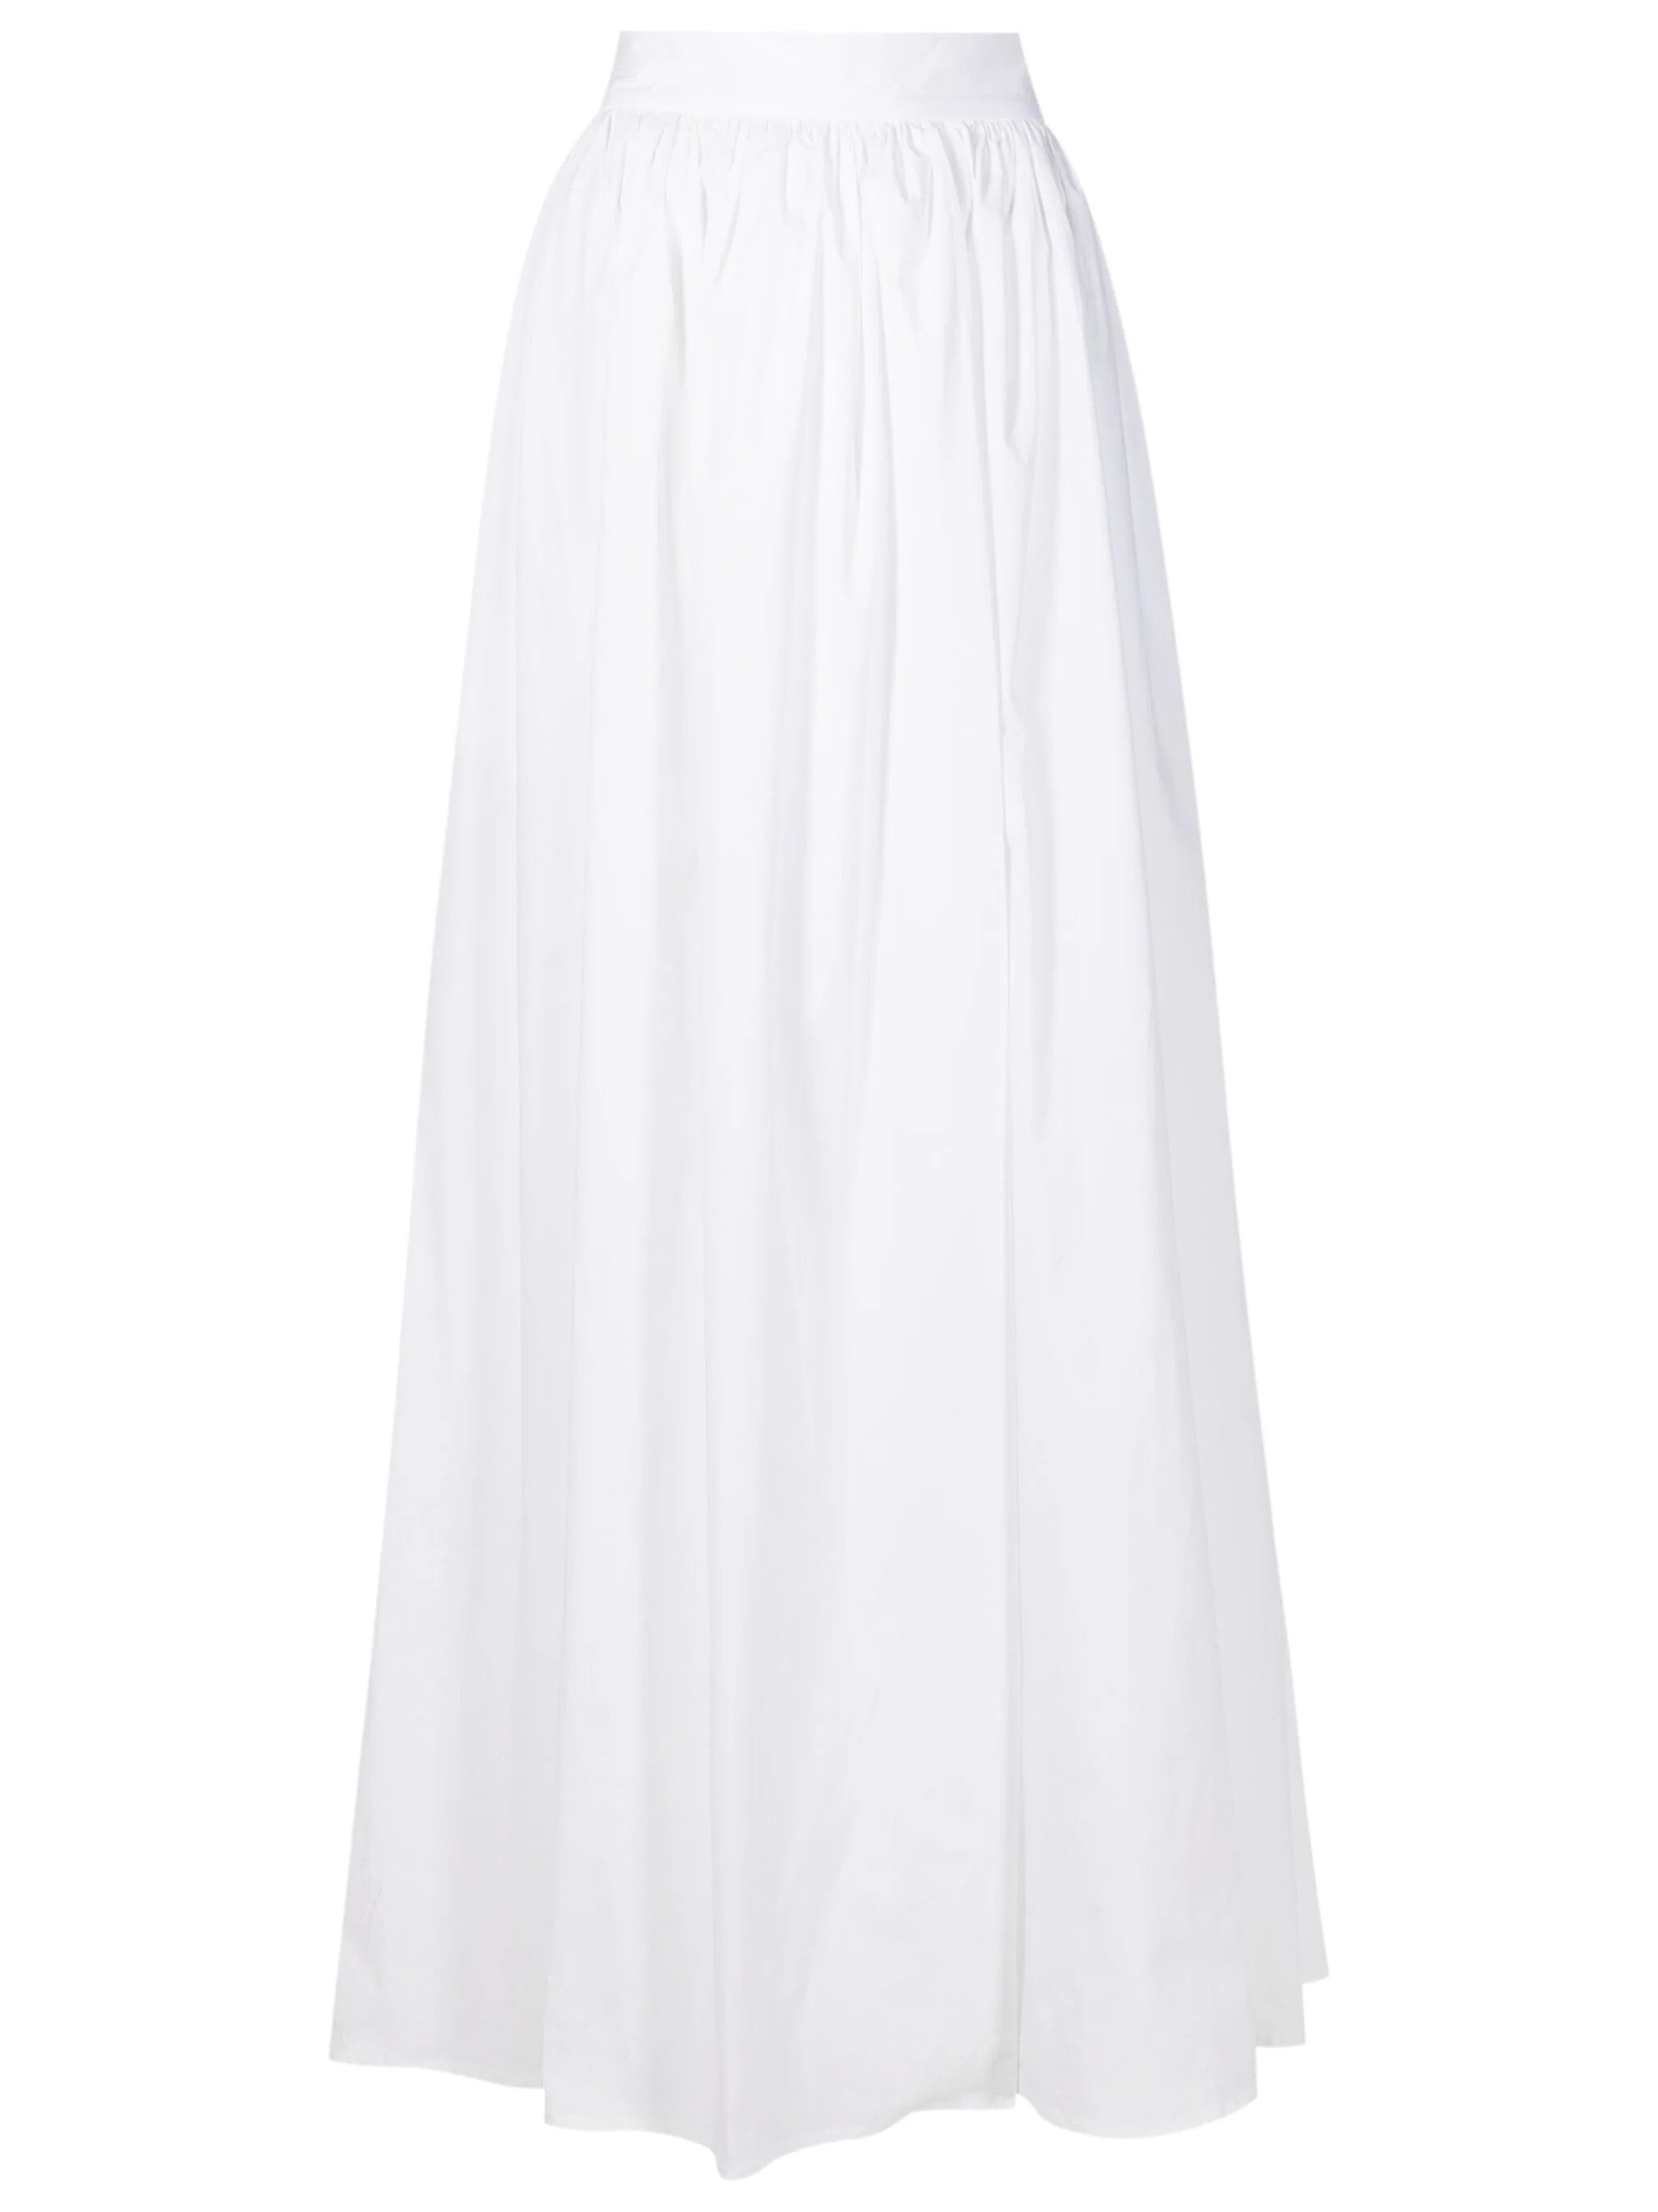 Solid Off White Long Skirt